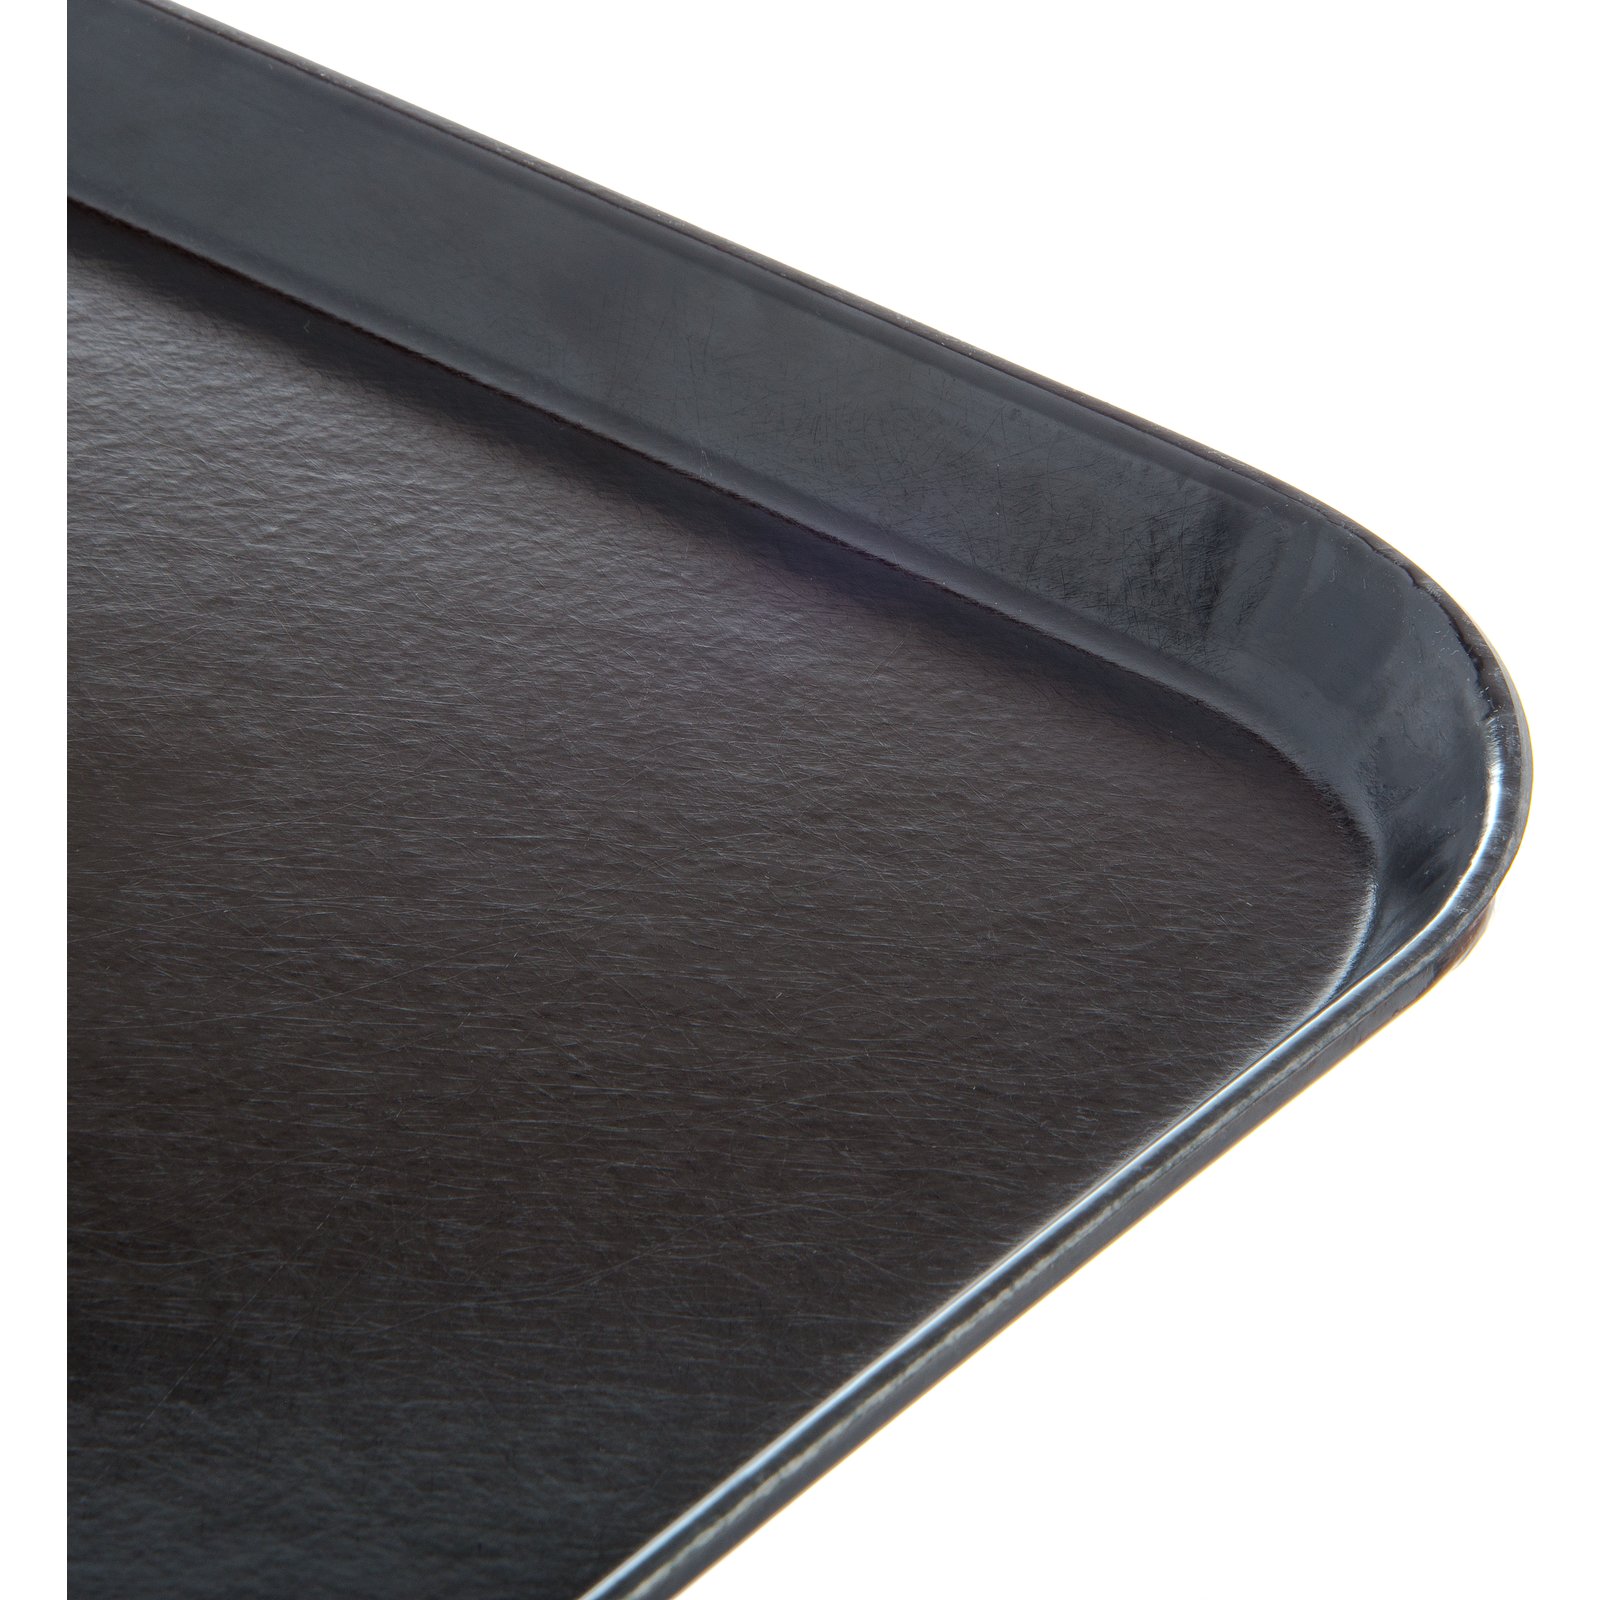 DX1089M23 - Glasteel™ Flat Tray 15 x 20' (12/cs) - Gray